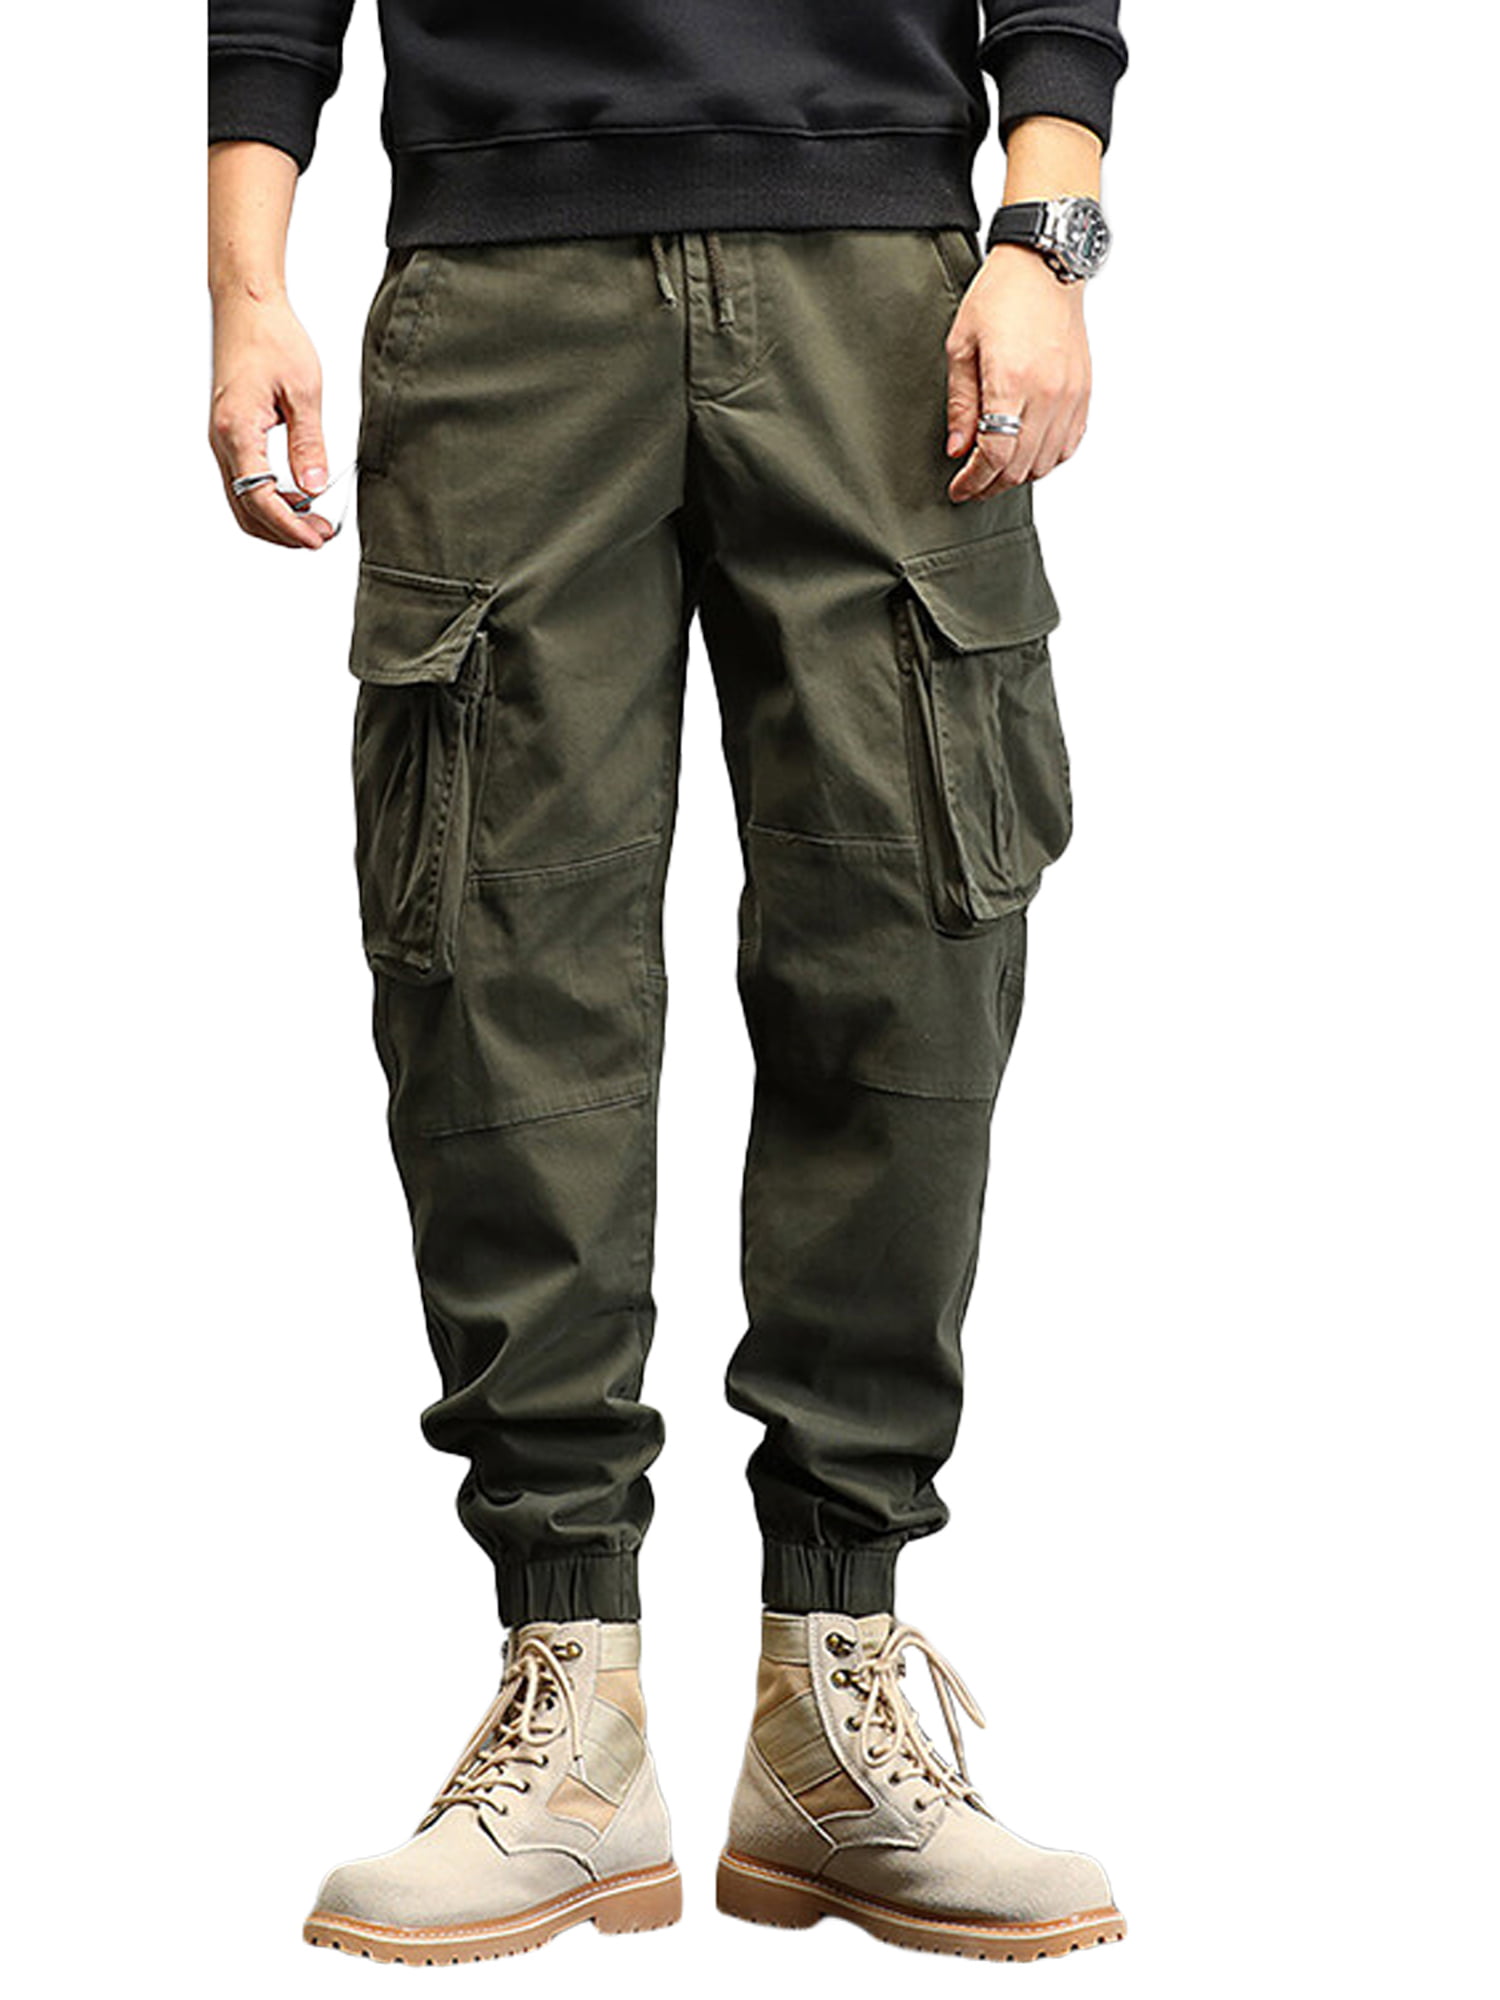 Mens Hiking Pants Convertible Zip Off Shorts Outdoor Quick Dry Lightweight Fishing Travel Safari Cargo Trouser 